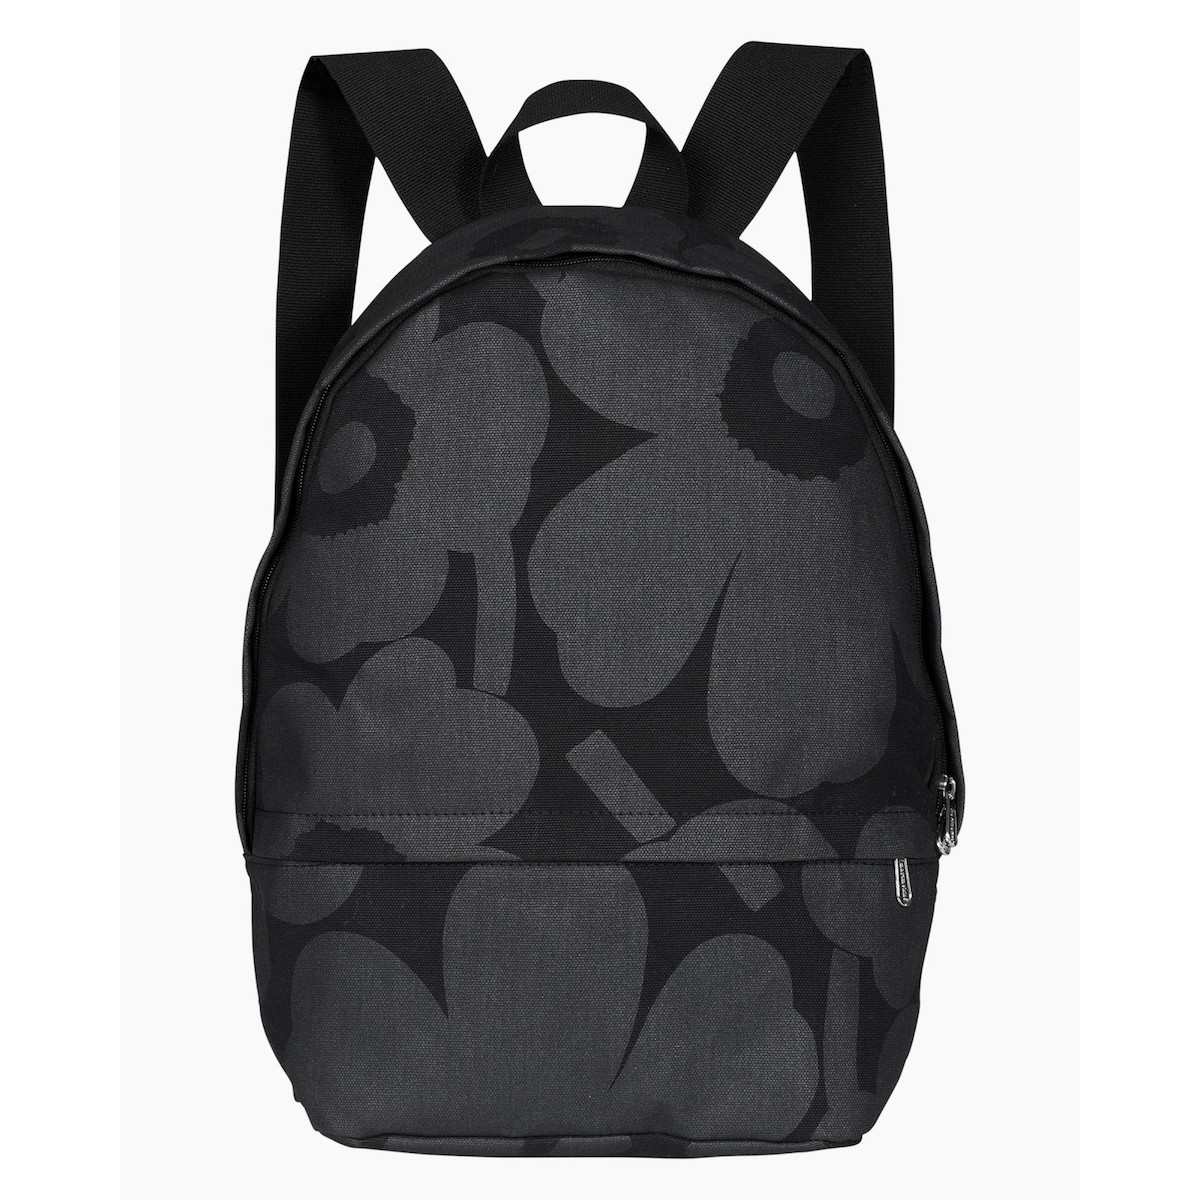 Enni Pieni Unikko backpack - black 999 - Marimekko bag